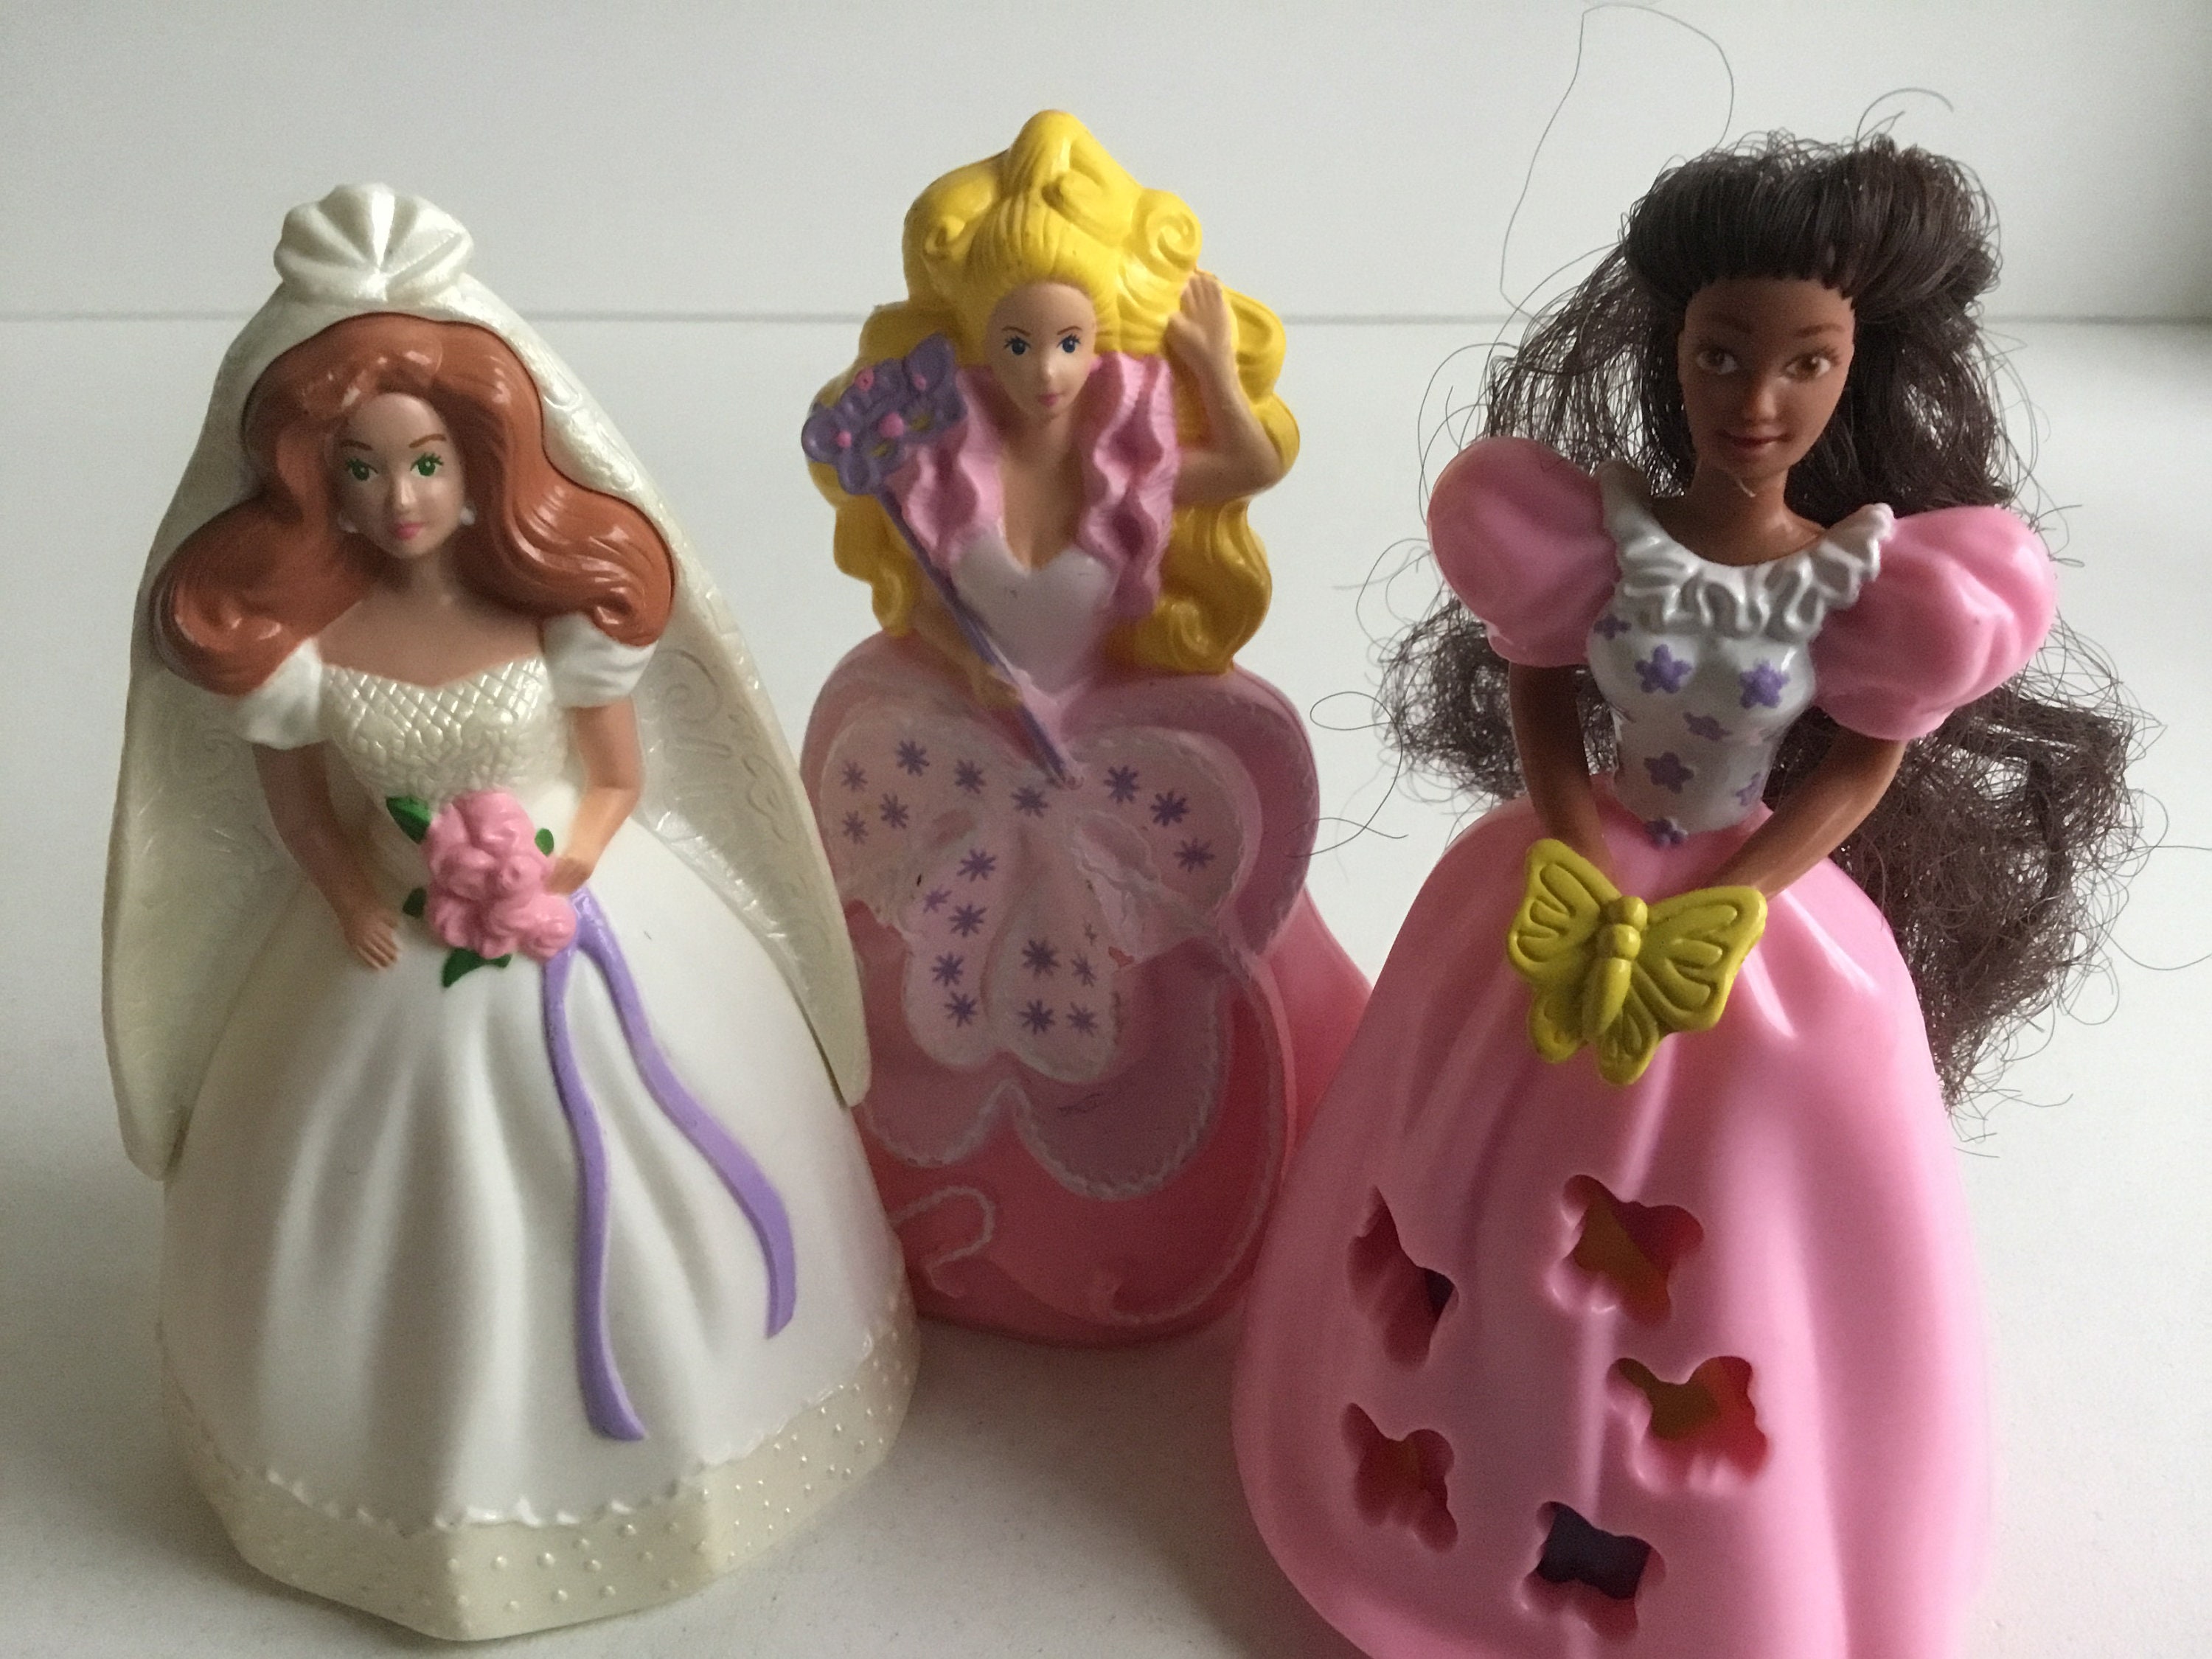 Vintage Barbie Toys Mcdonalds Happy Meal 1991-1993 You Pick 